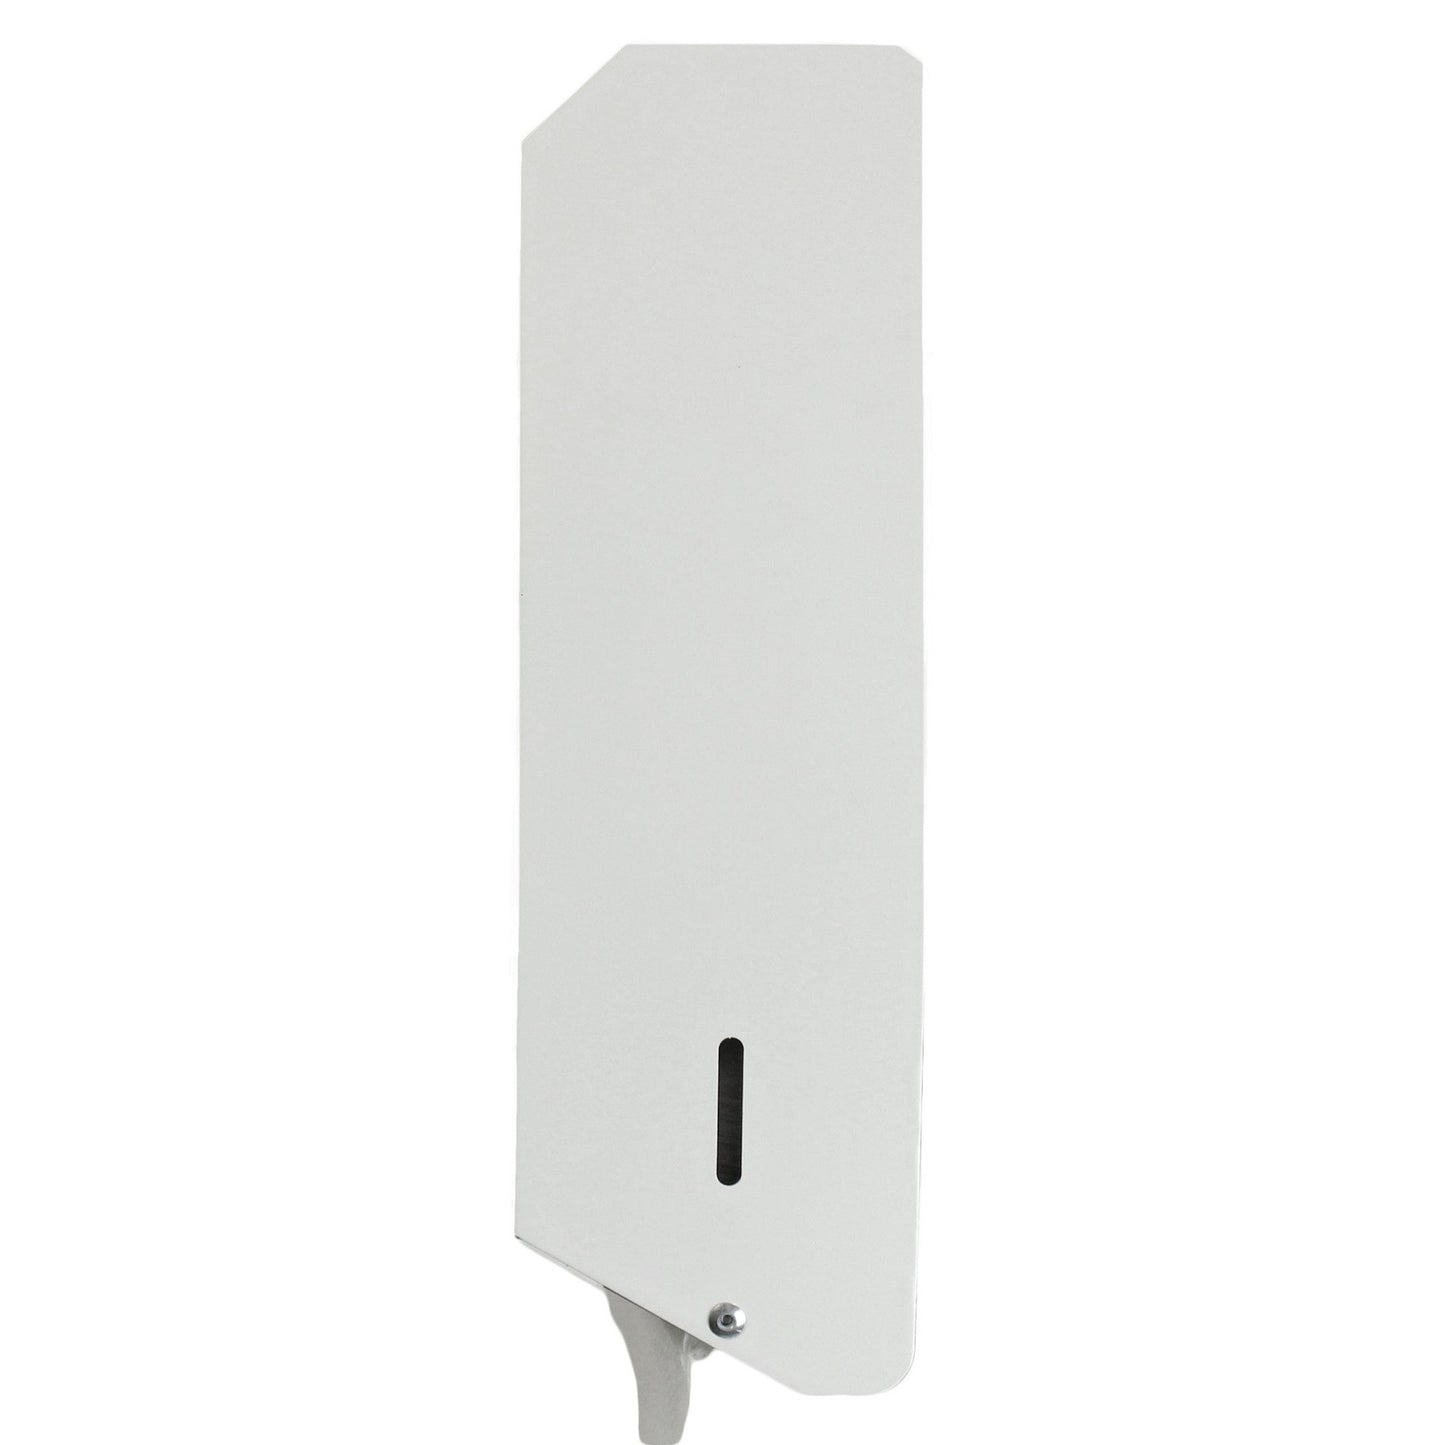 Frost 11 x 13.4 x 4.1 White Epoxy Powder Paper Product Dispenser